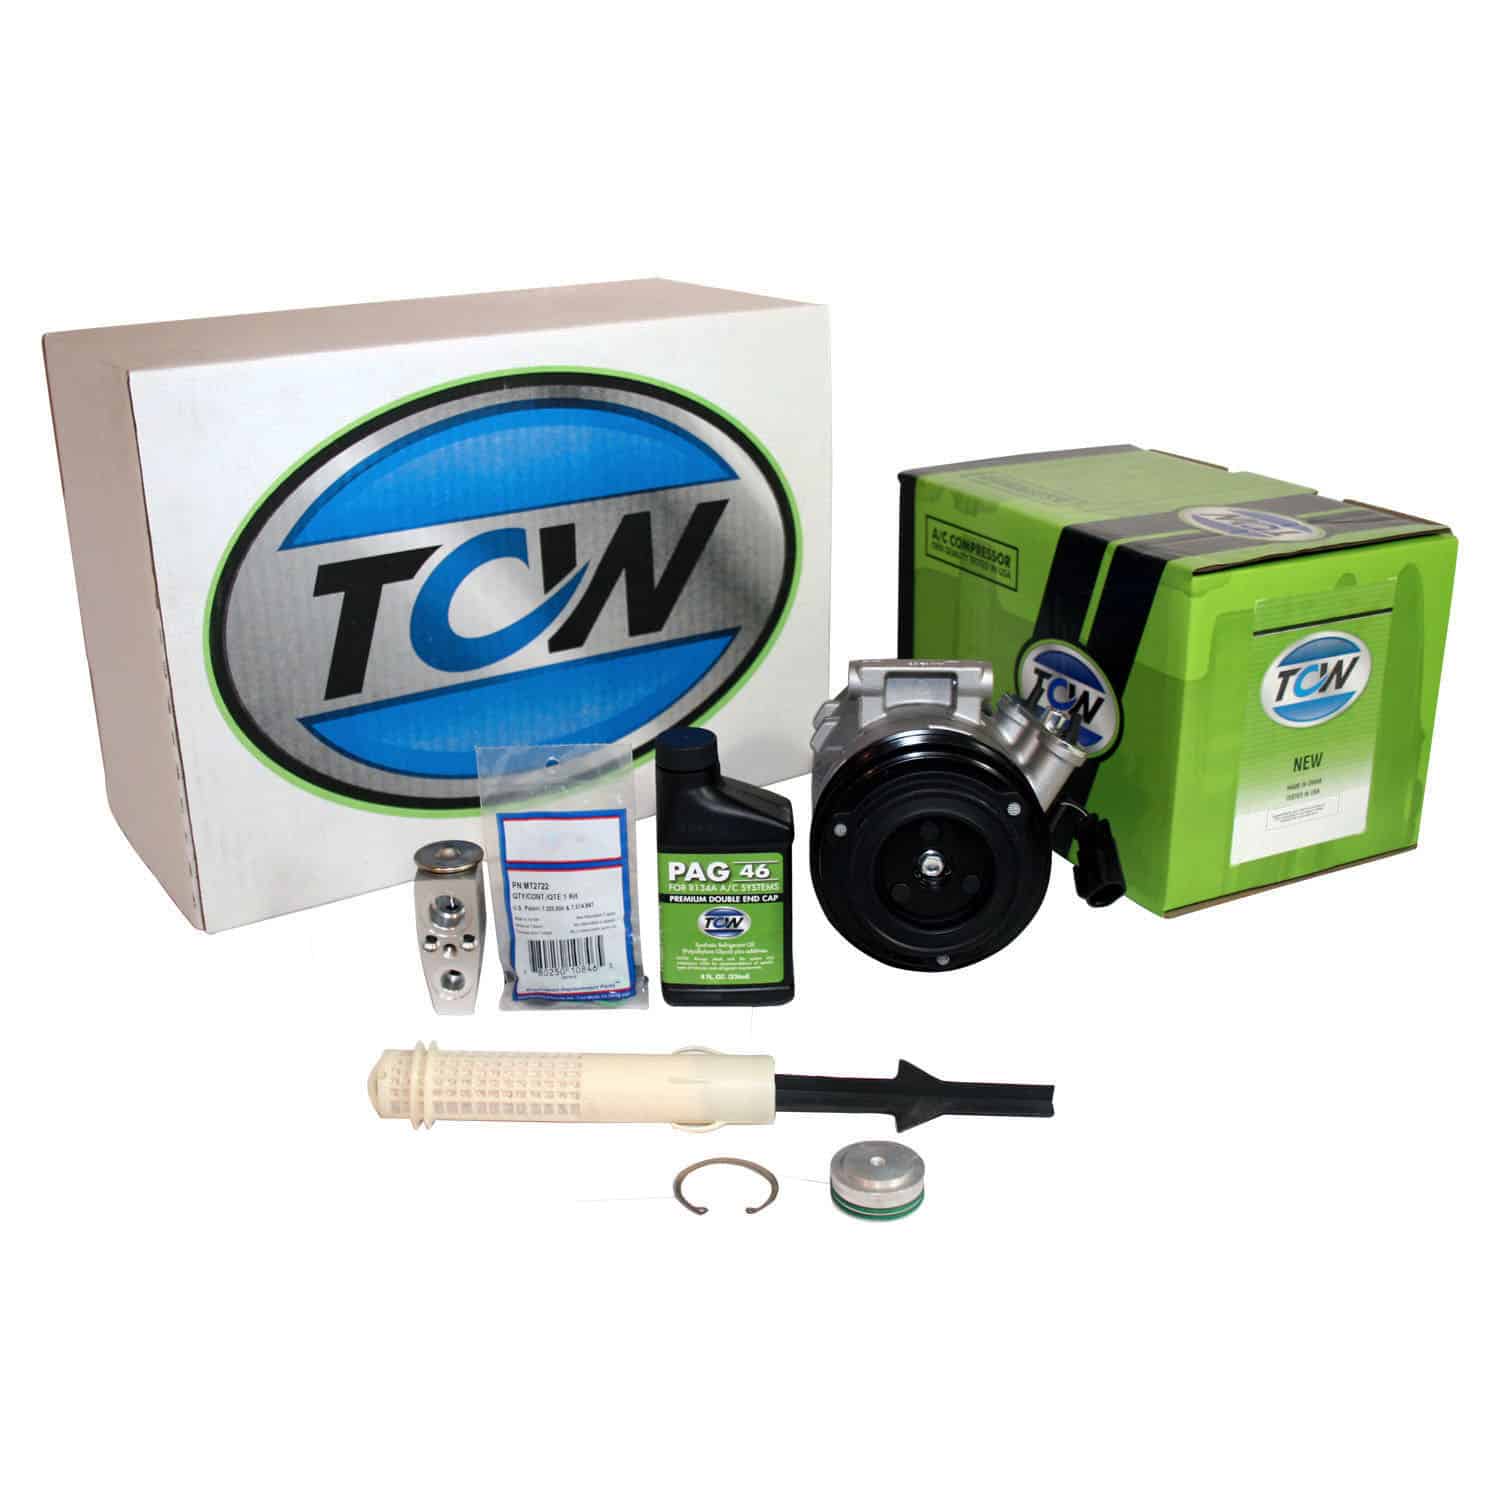 TCW Vehicle A/C Kit K1000404N New Product Image field_60b6a13a6e67c